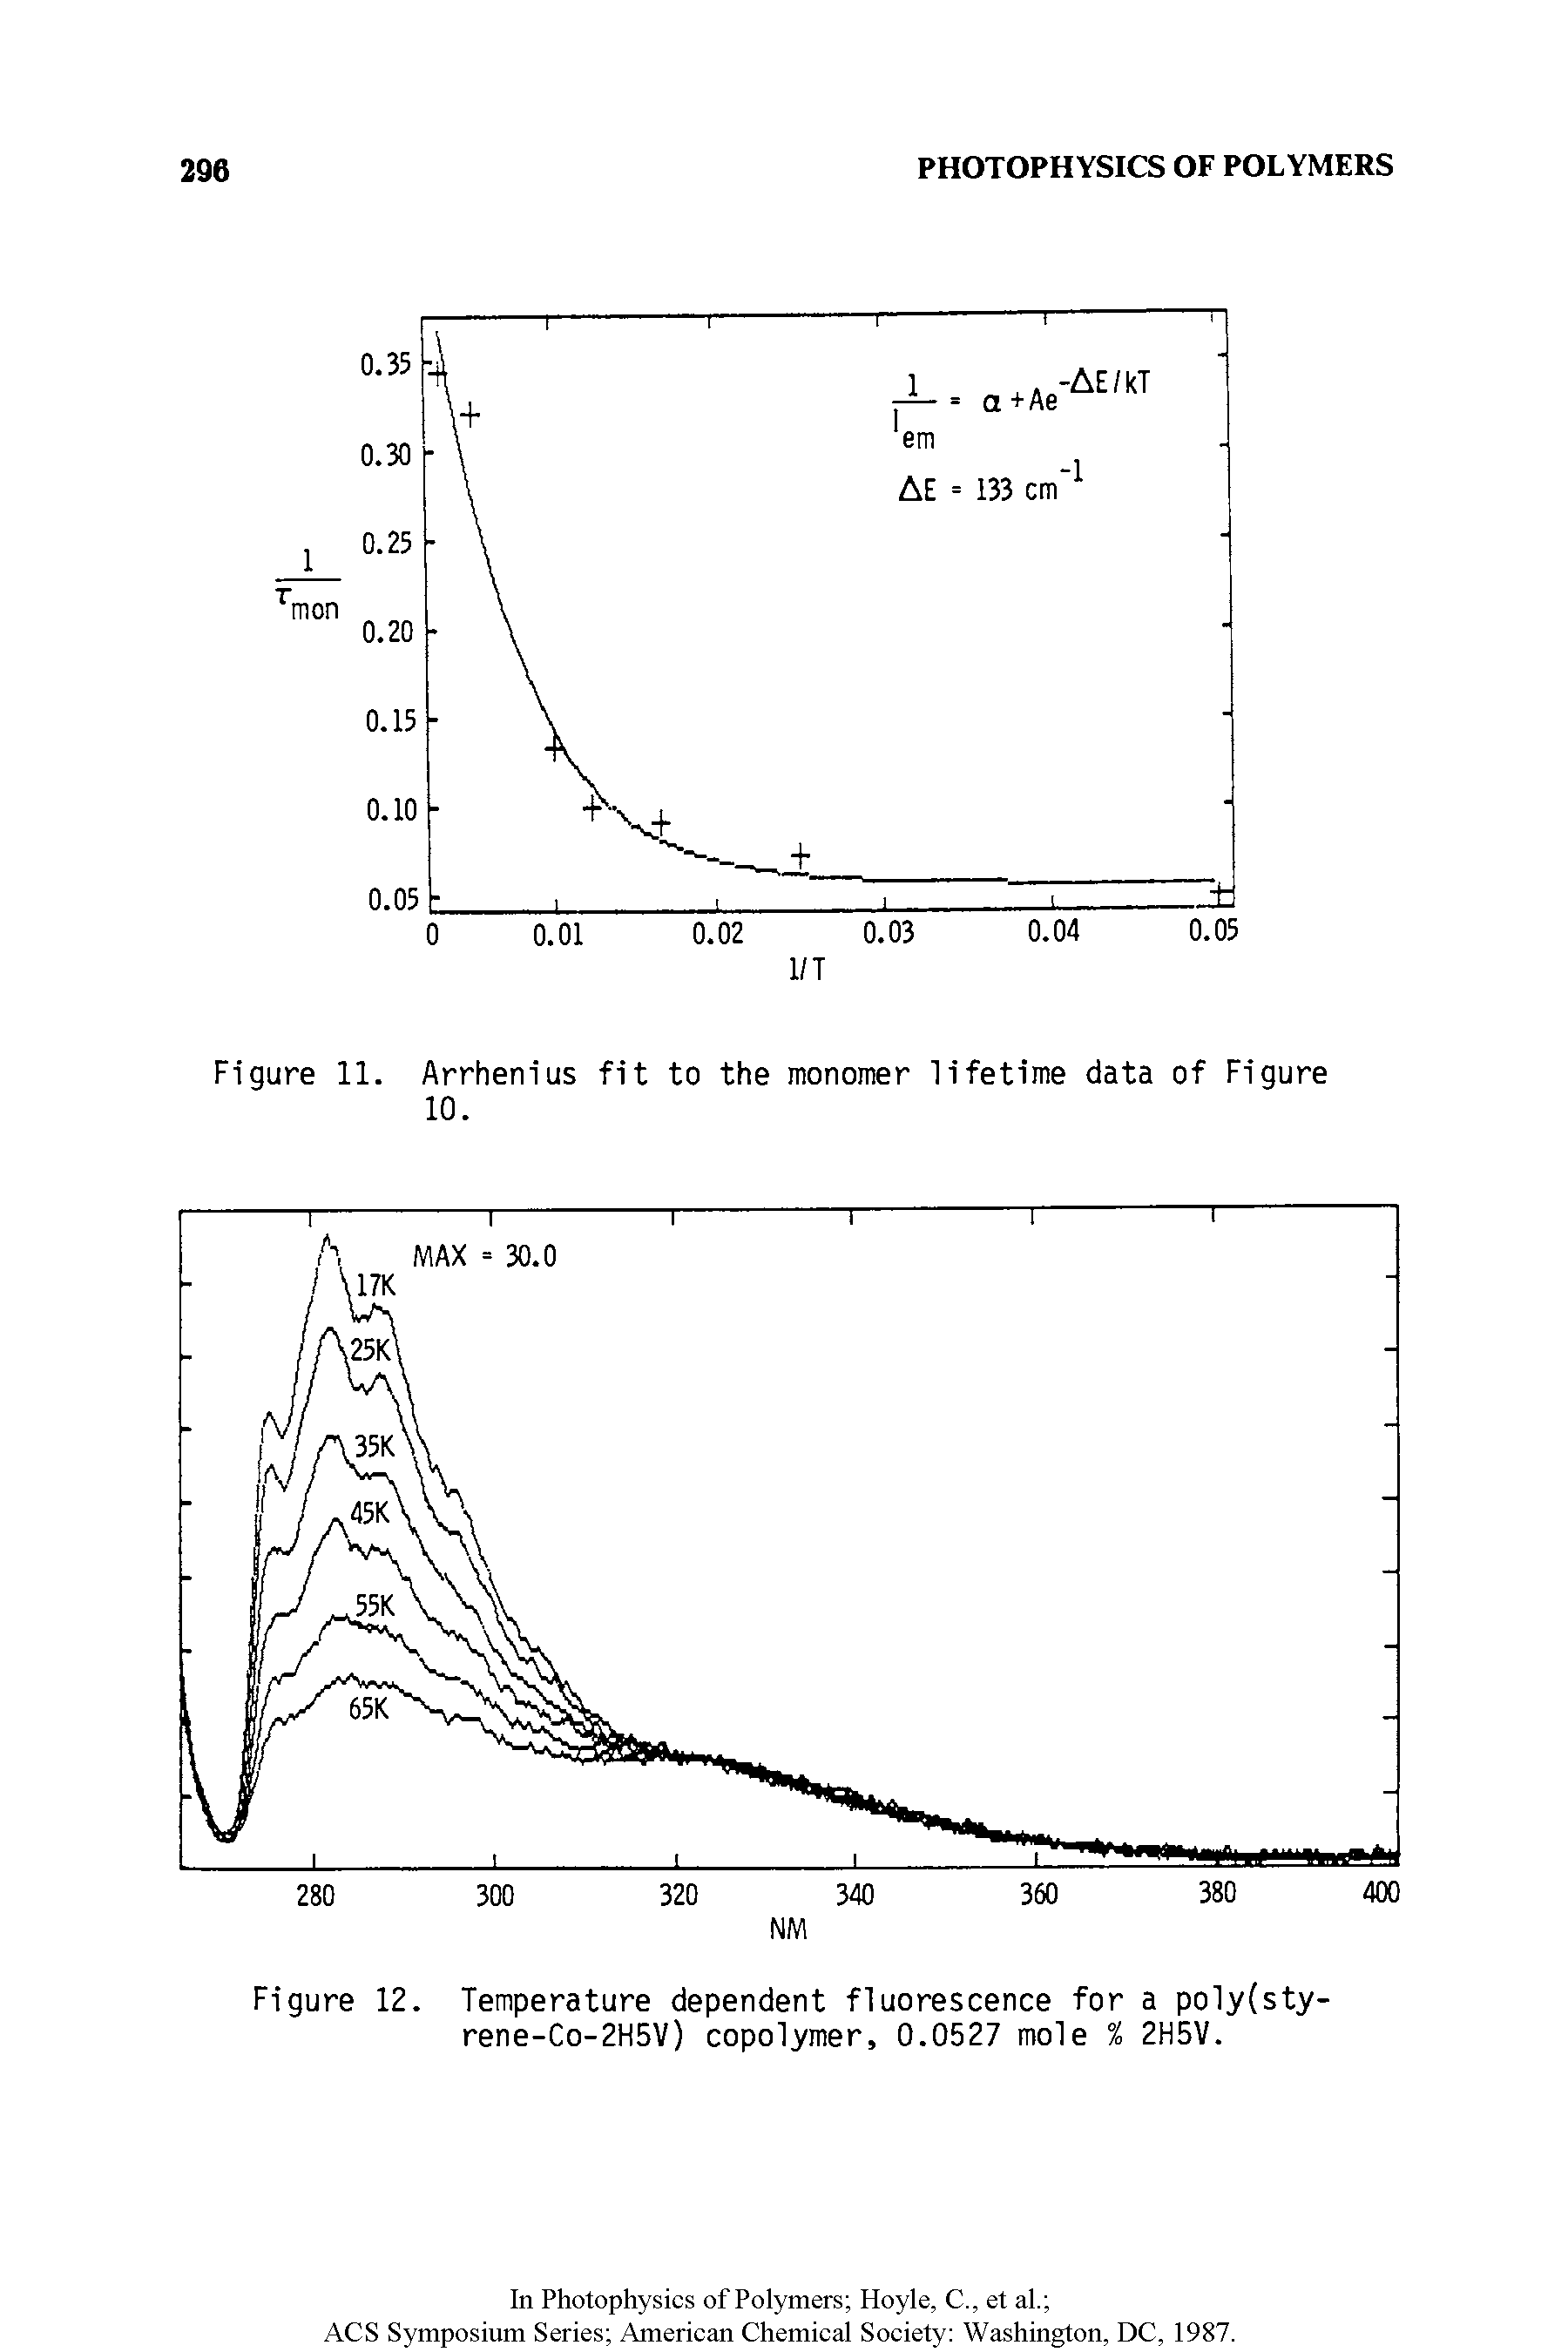 Figure 11. Arrhenius fit to the monomer lifetime data of Figure 10.